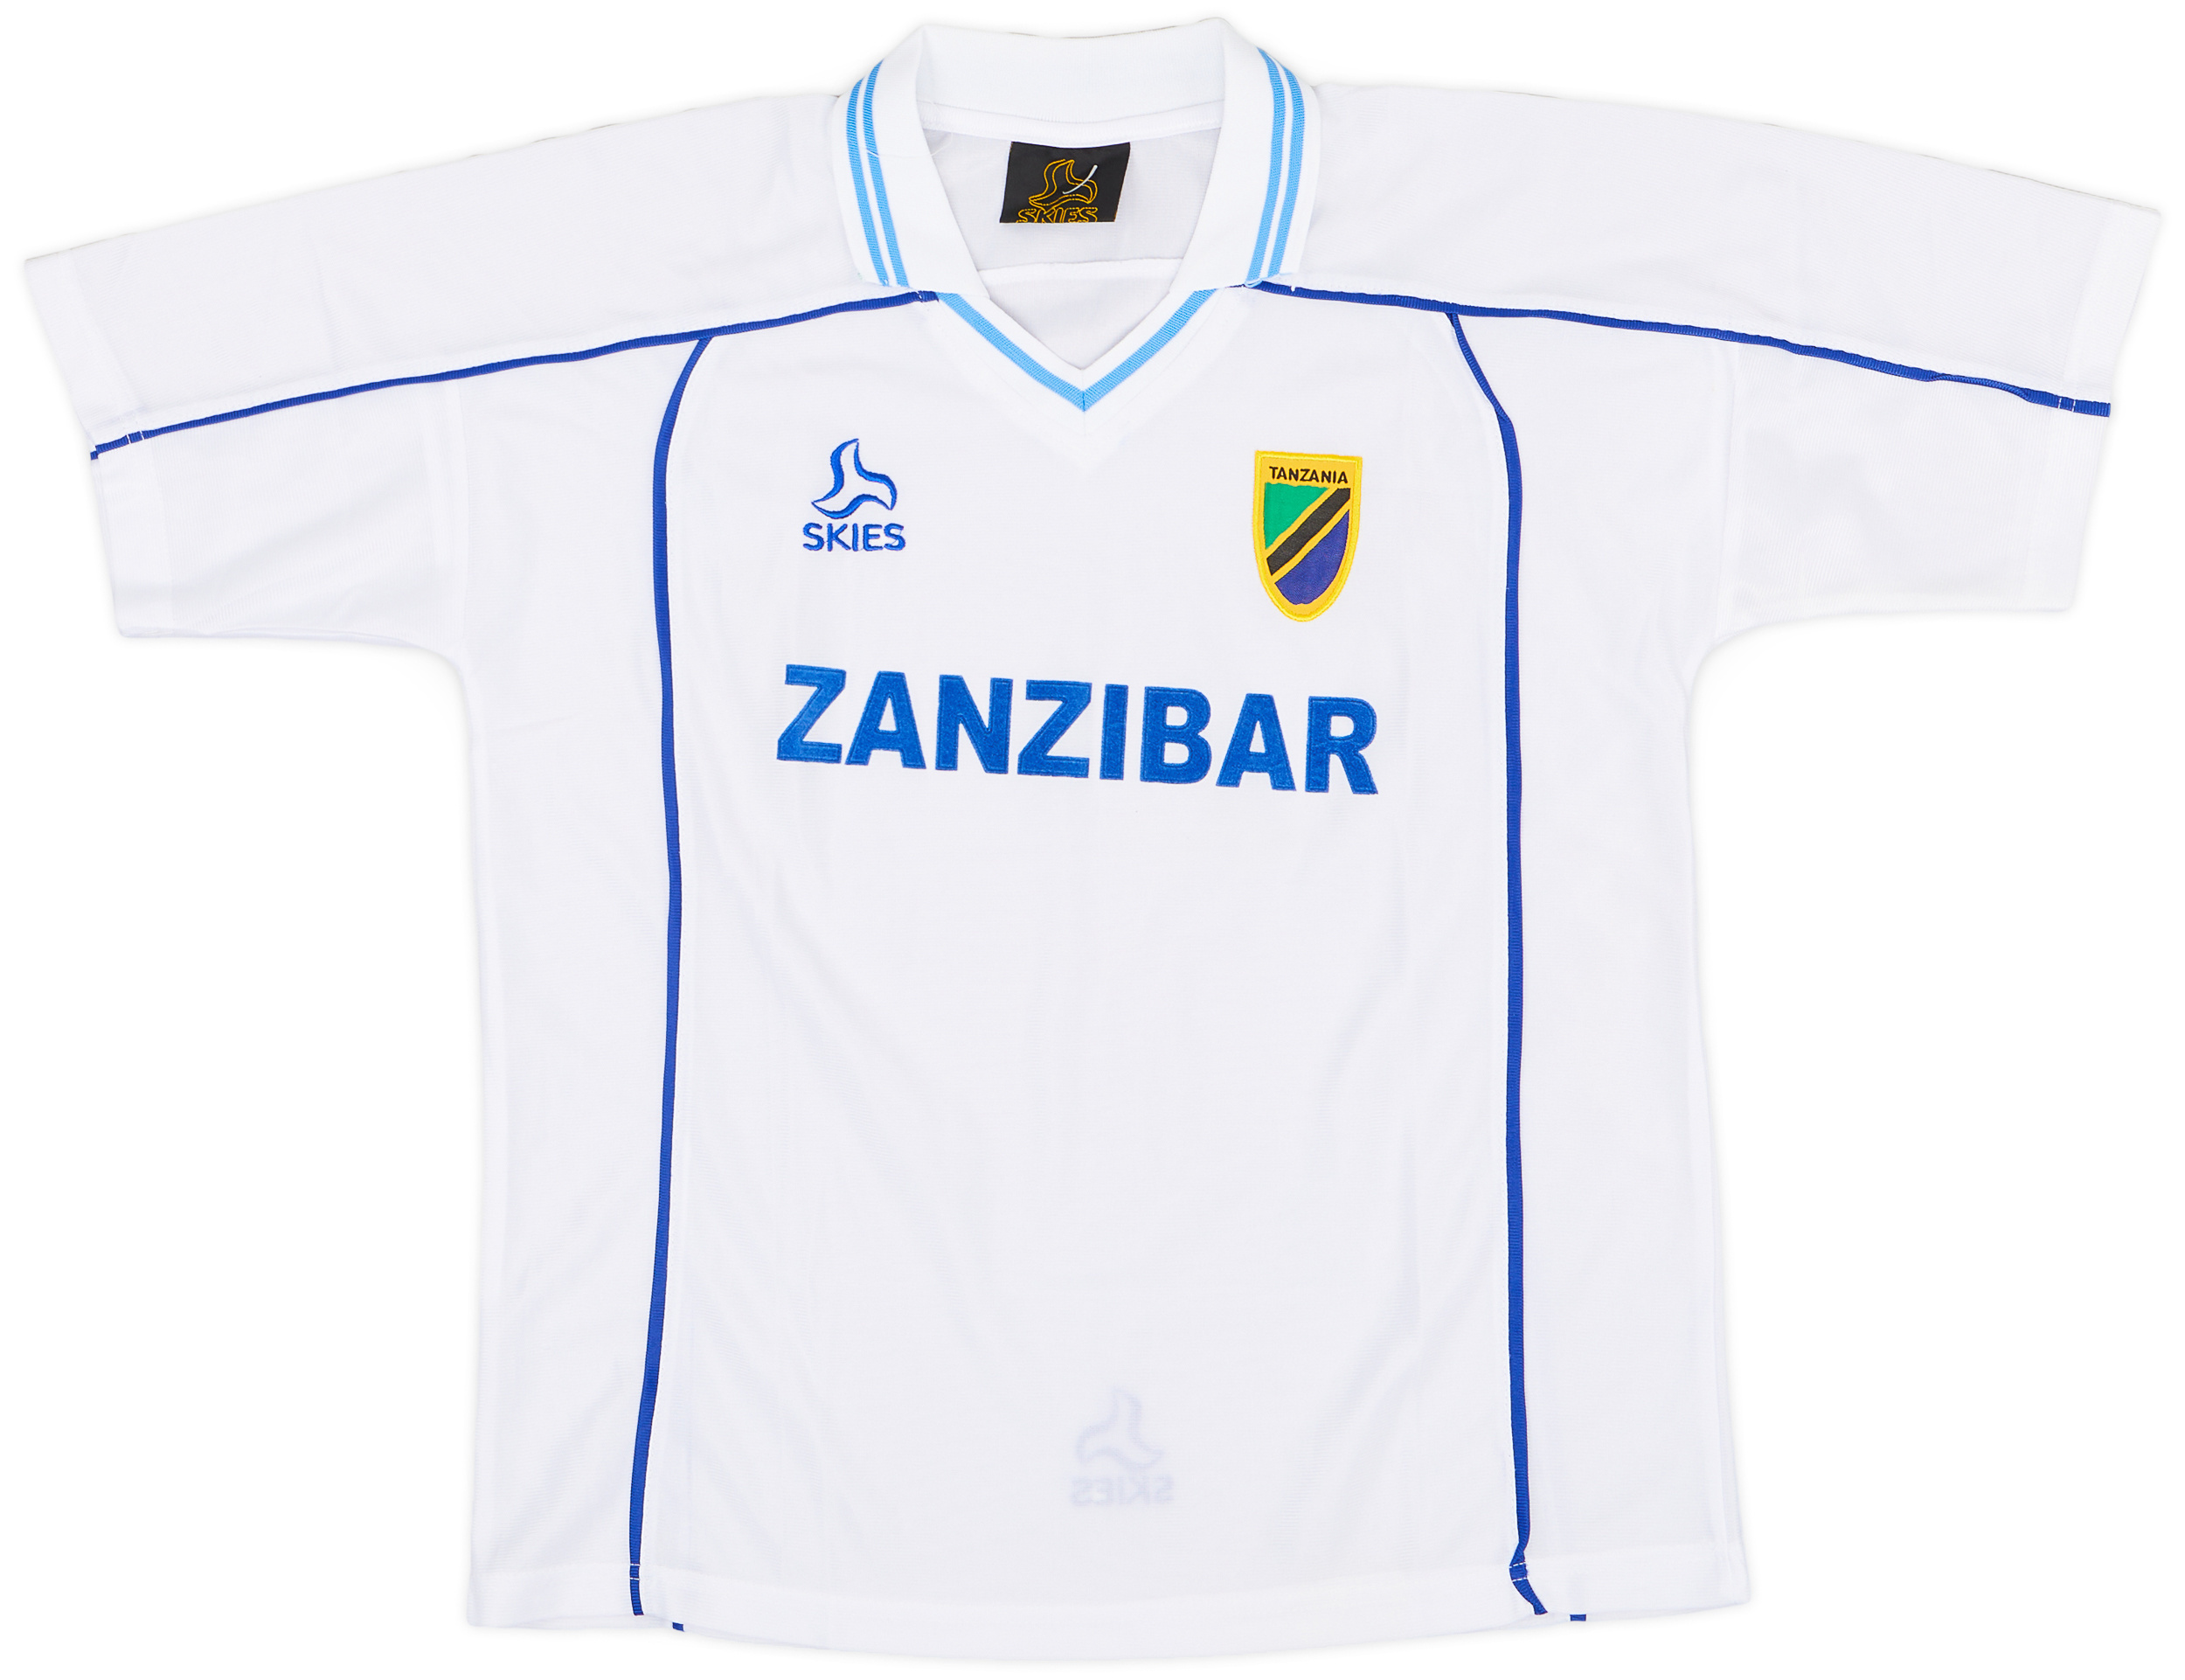 2003-06 Tanzania Supporters Shirt - 8/10 - ()